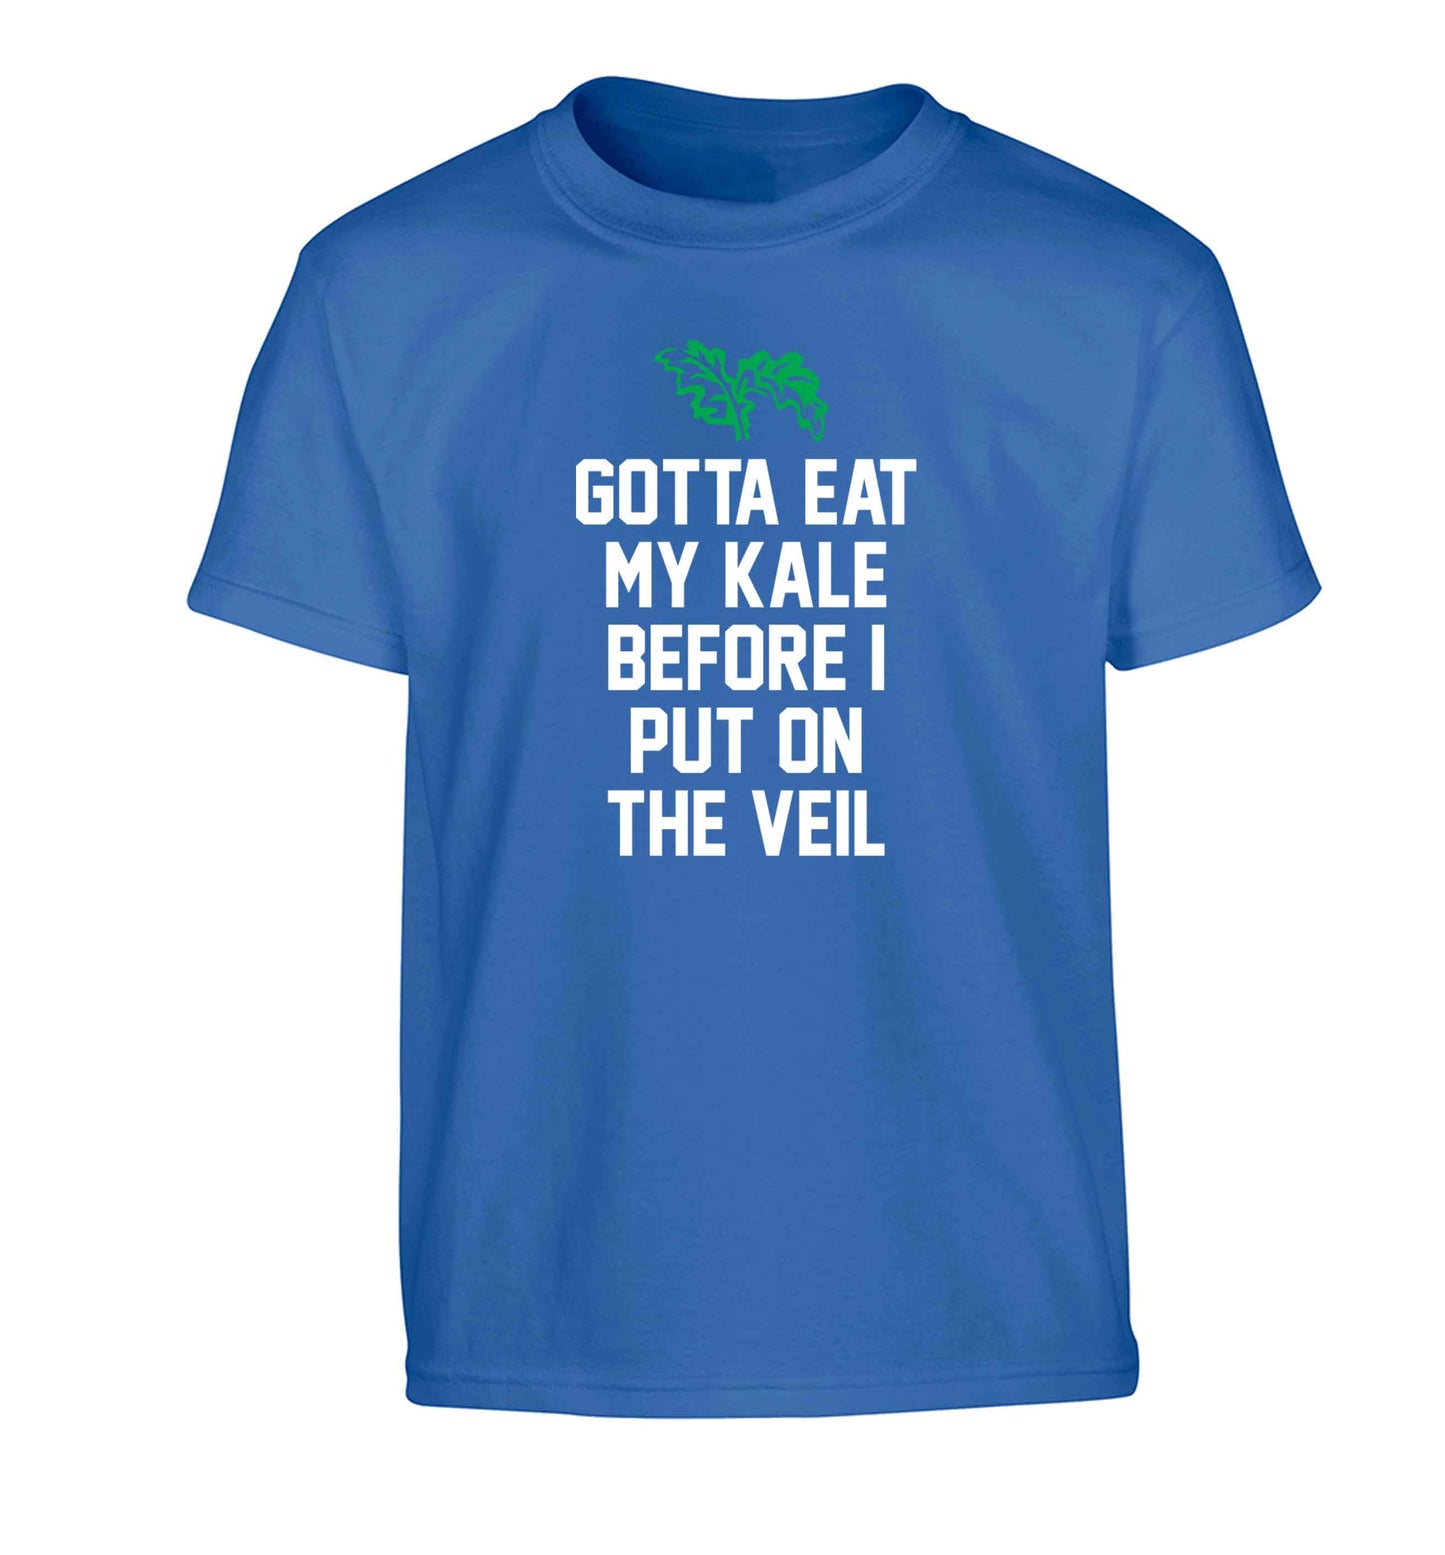 Gotta eat my kale before I put on the veil Children's blue Tshirt 12-13 Years